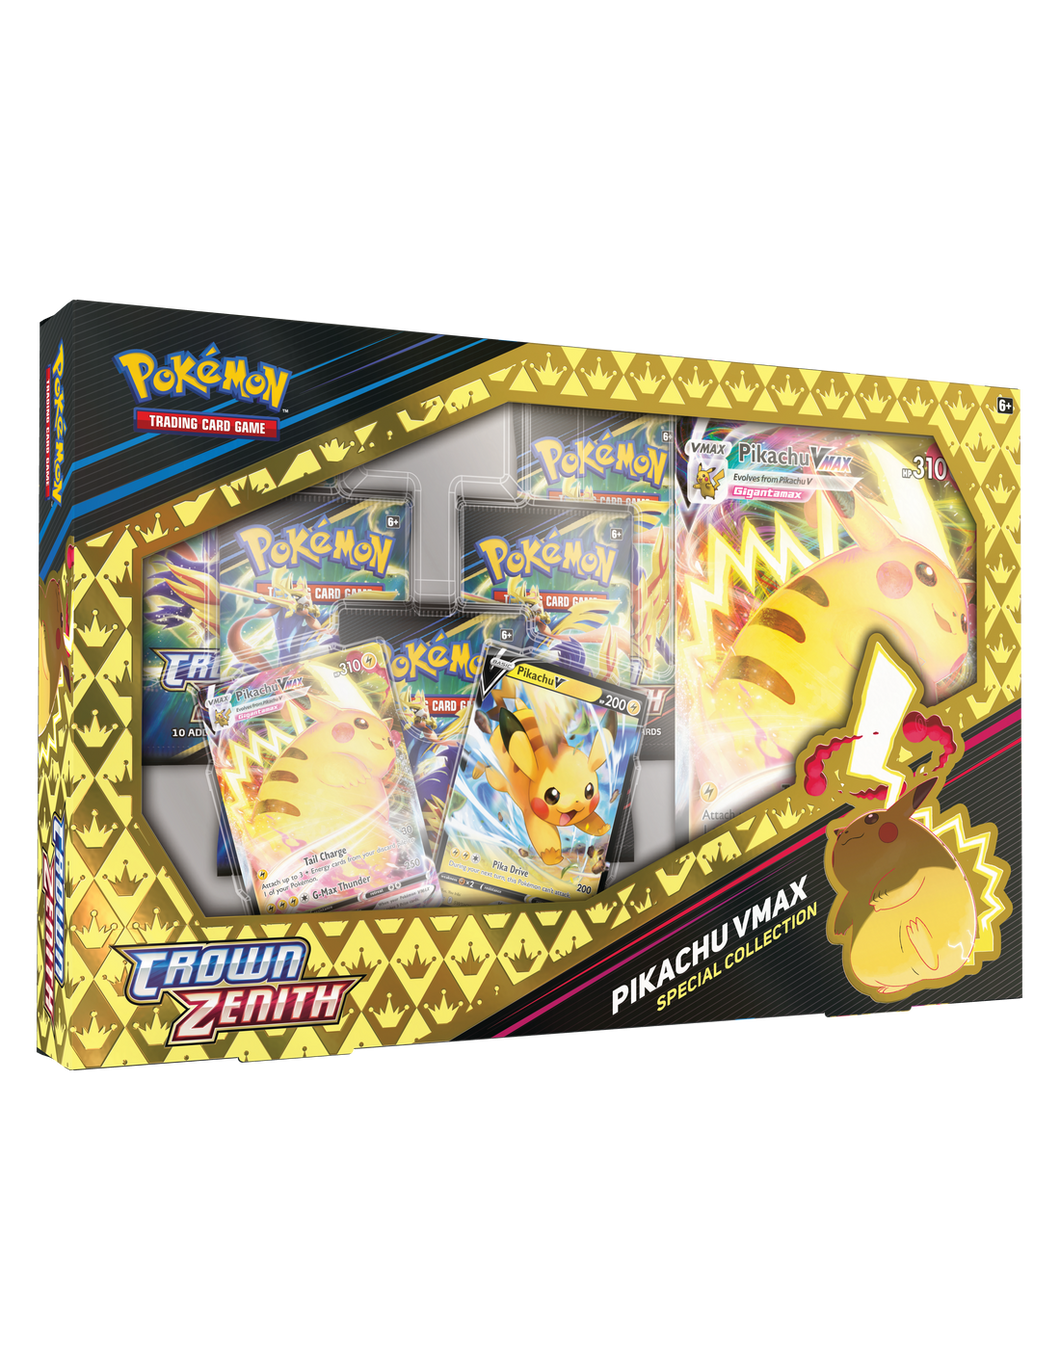 Coffret Pikachu VMAX (EXCLU 7 Boosters) Zénith Suprême Pokémon FR